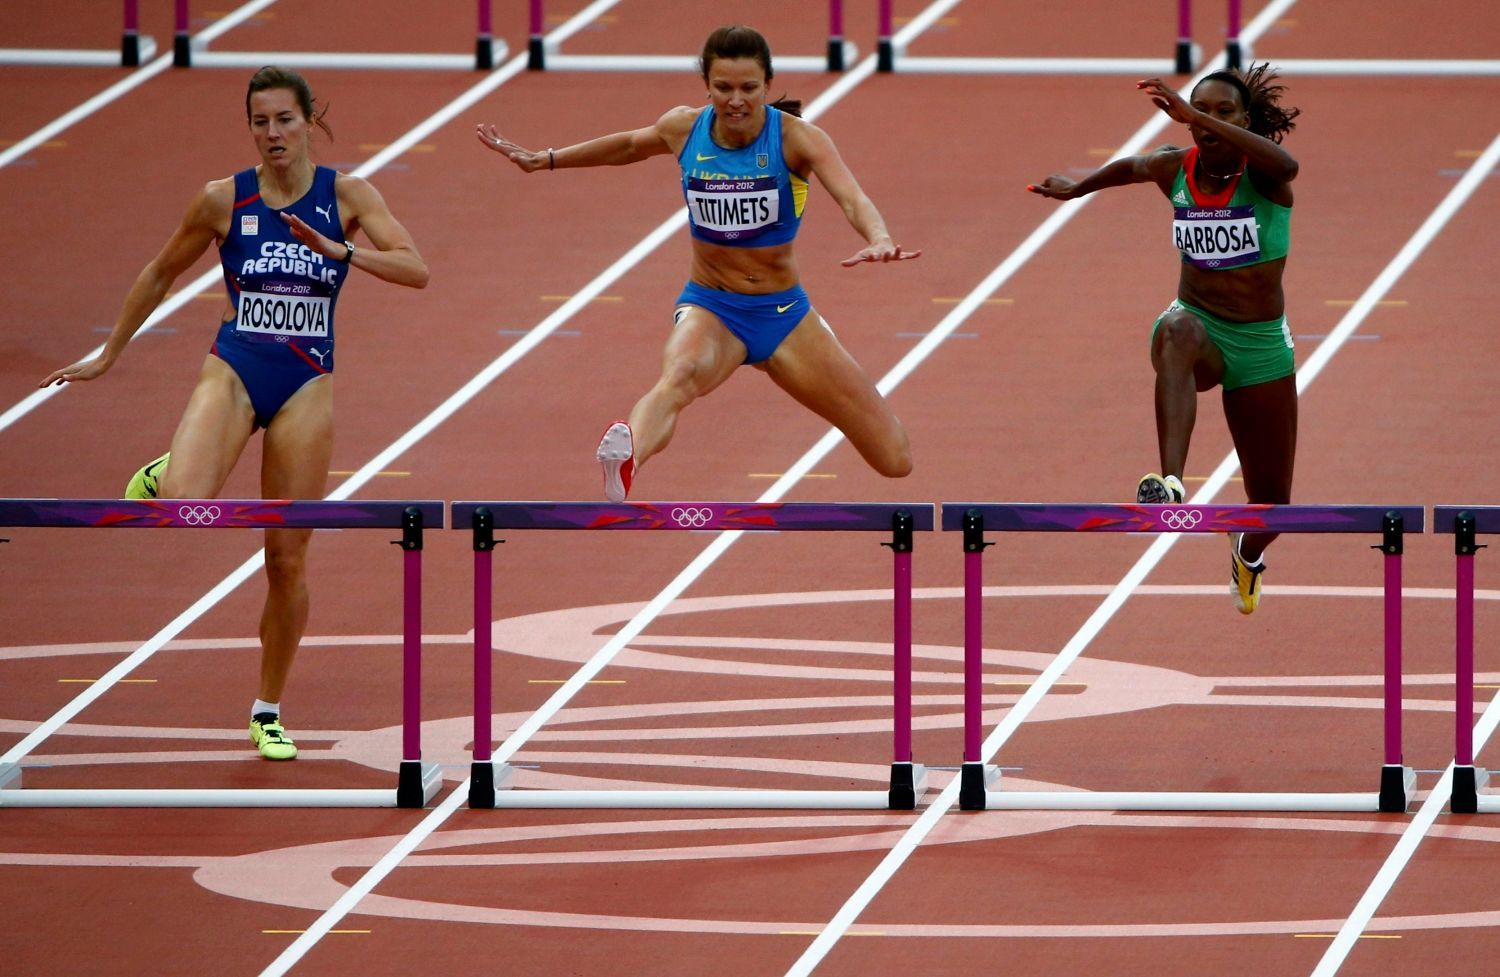 Тест легкая атлетика бег. Бег с барьерами на 400 м. Лондон 2012 бег с барьерами. Легкая атлетика 400 метров с барьерами. Техника бега на 400 м с барьерами.